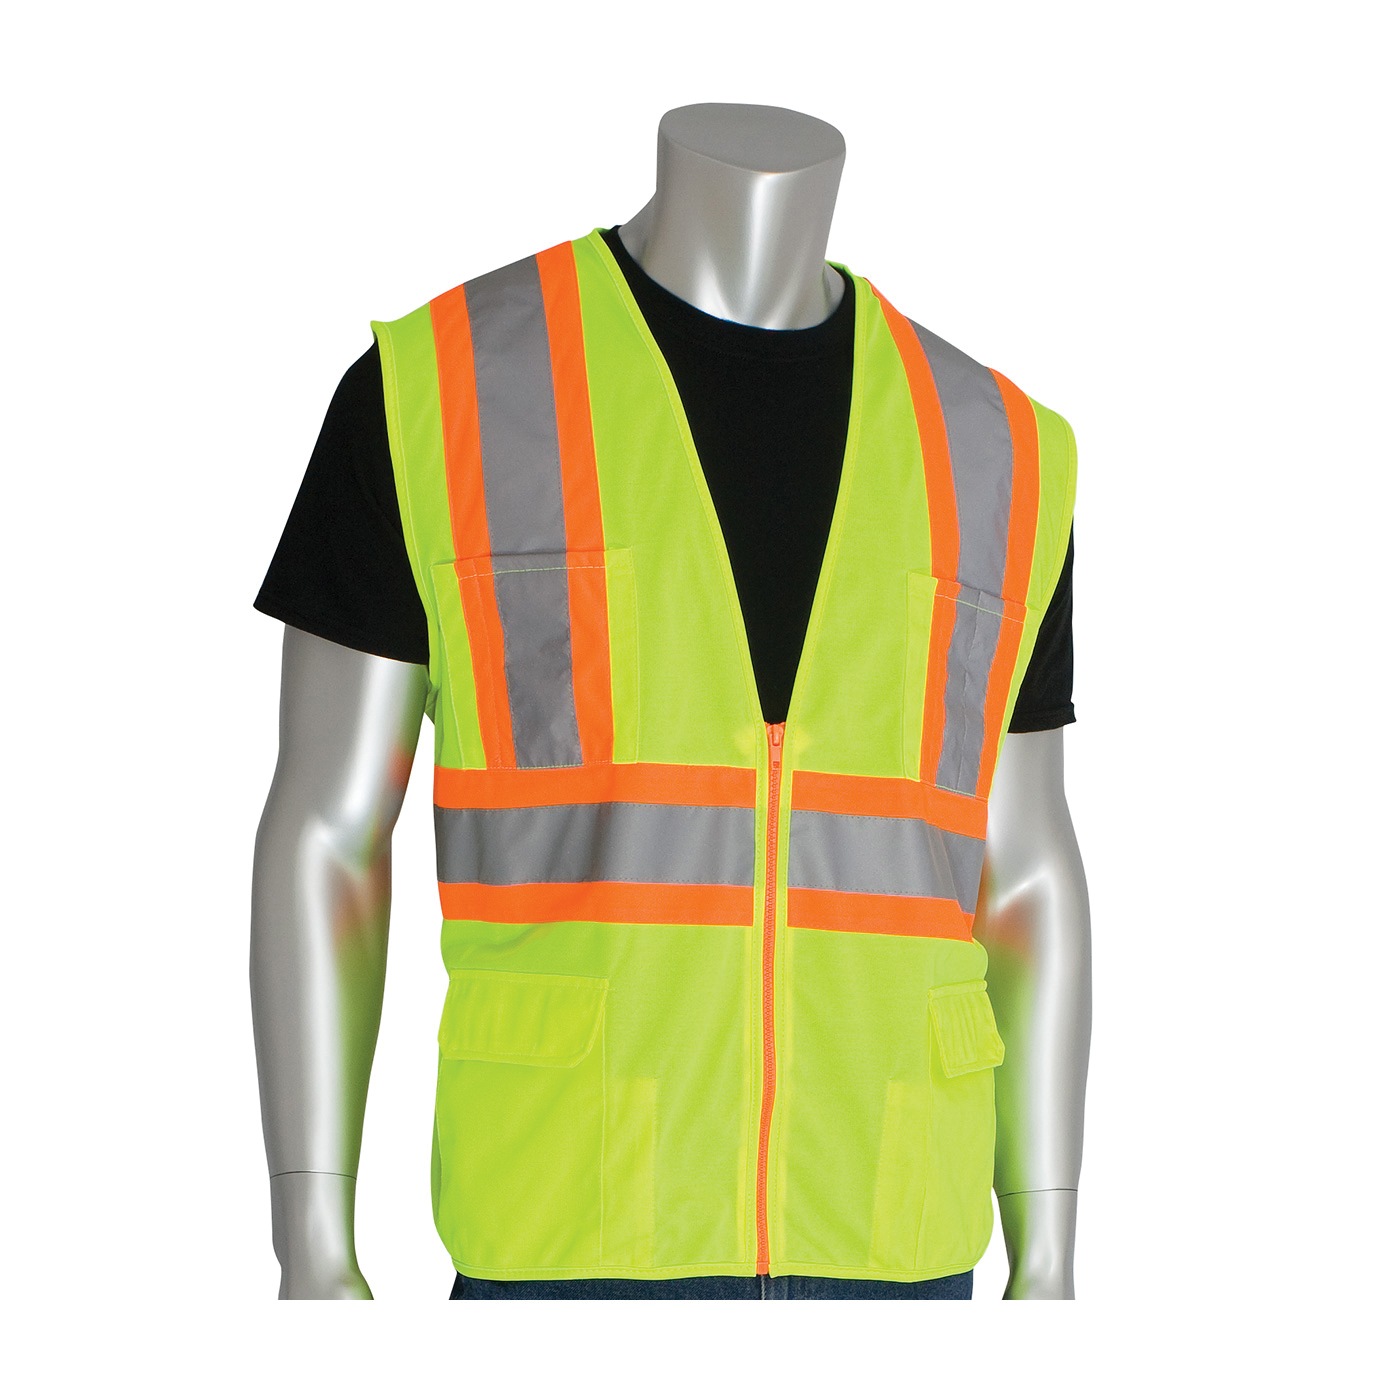 PIP® 302-MAPLY-2X 2-Tone Premium Surveyor Safety Vest, 2XL, Hi-Viz Lime Yellow, Polyester, Zipper Closure, 11 Pockets, ANSI Class: Class 2, Specifications Met: ANSI 107 Type R